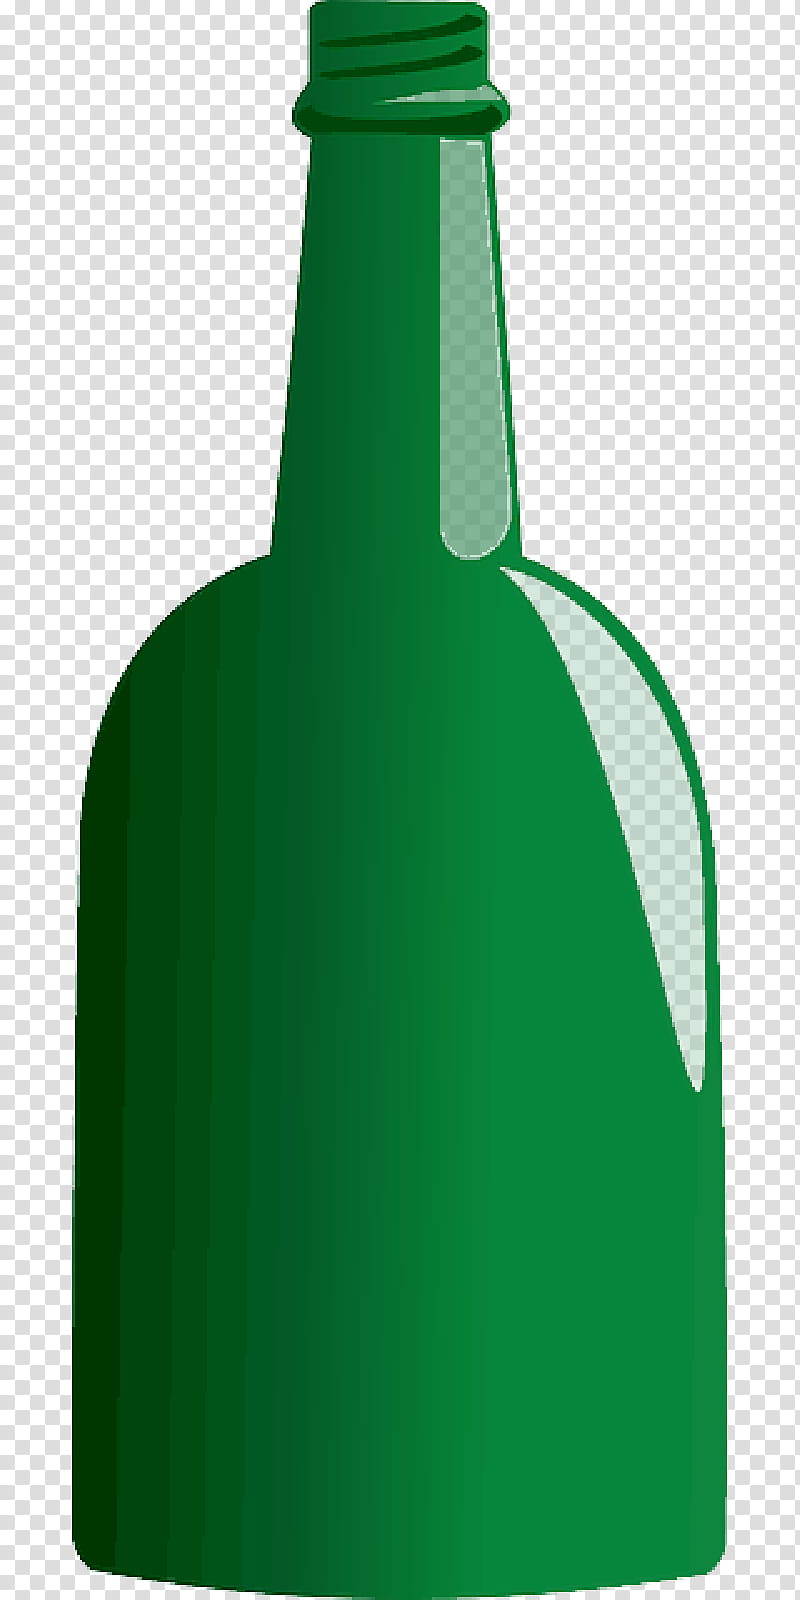 Wine Glass, Bottle, Beer Bottle, Jeroboam, Glass Bottle, Water Bottles, Green, Wine Bottle transparent background PNG clipart